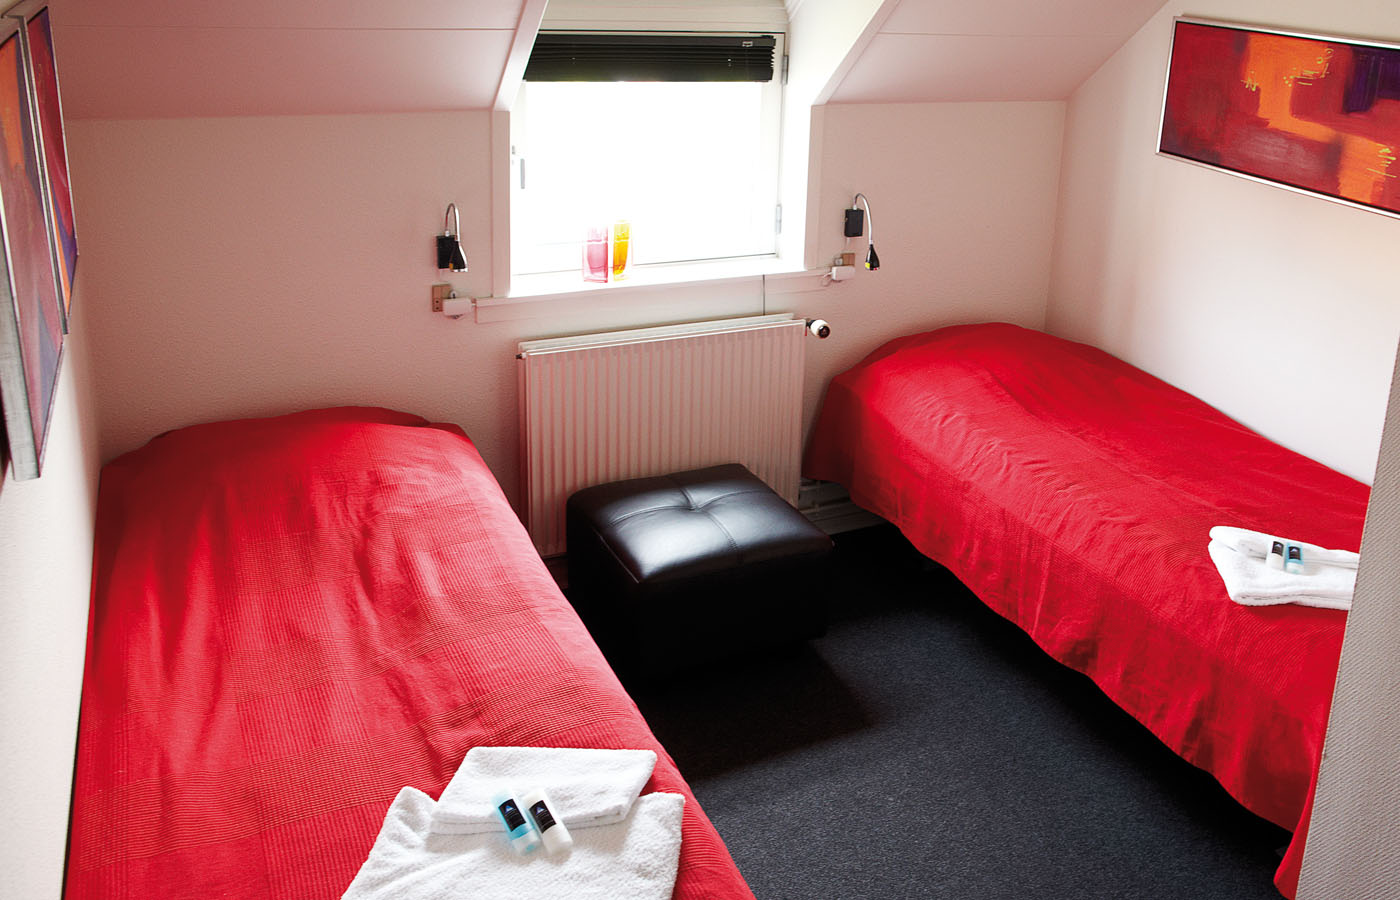 værelse med senge og sengelamper som kan benyttes når du overnatter I Svendborg